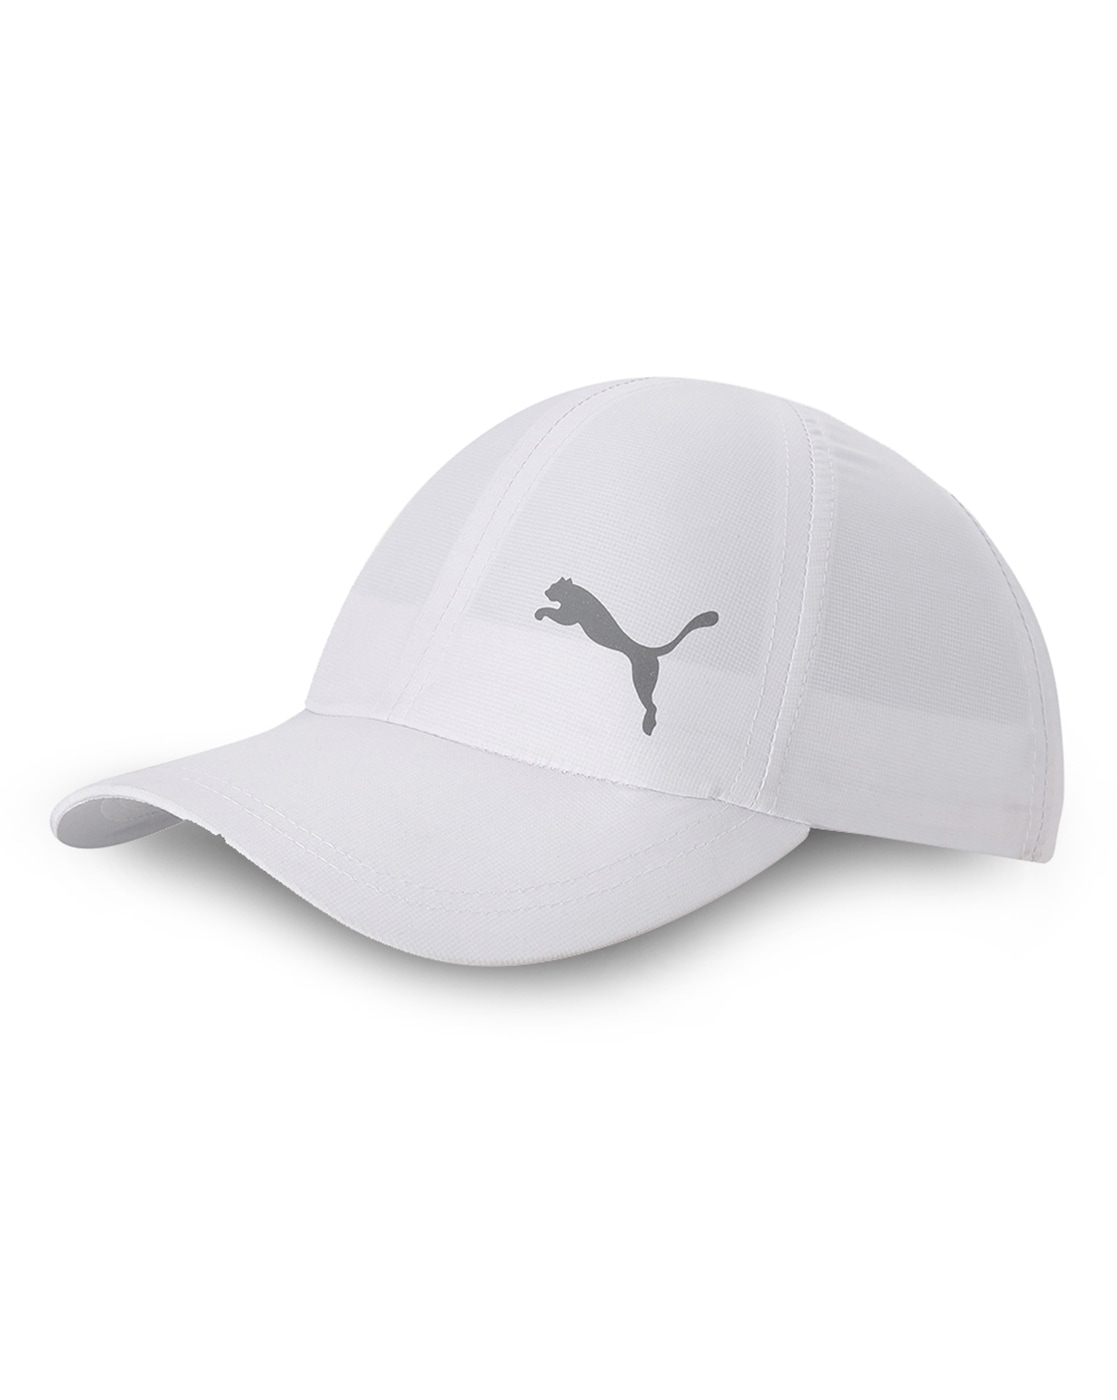 Buy for Online Puma Black Hats Men Caps & by